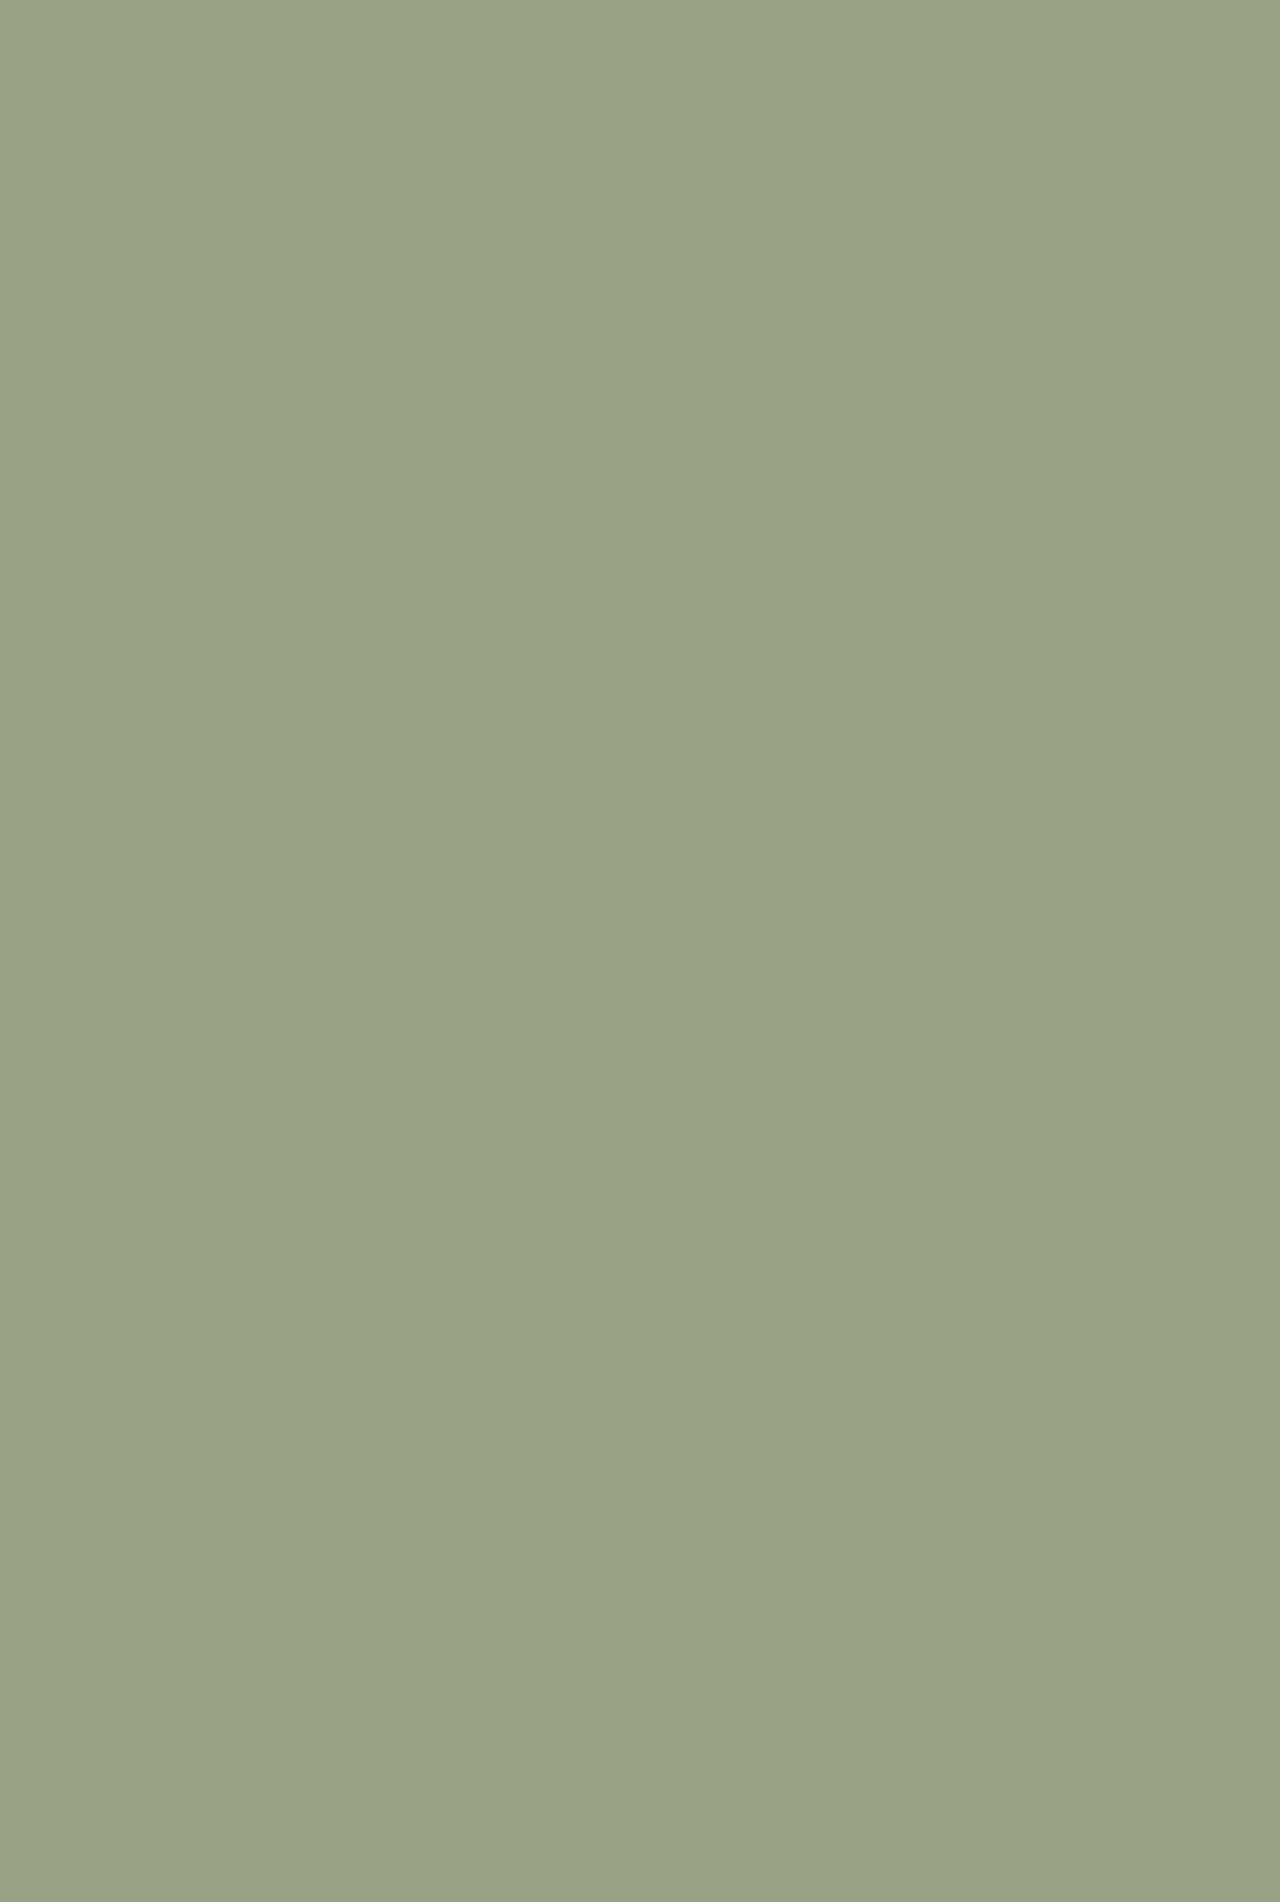 Elegant Olive Green Gradient Background Wallpaper